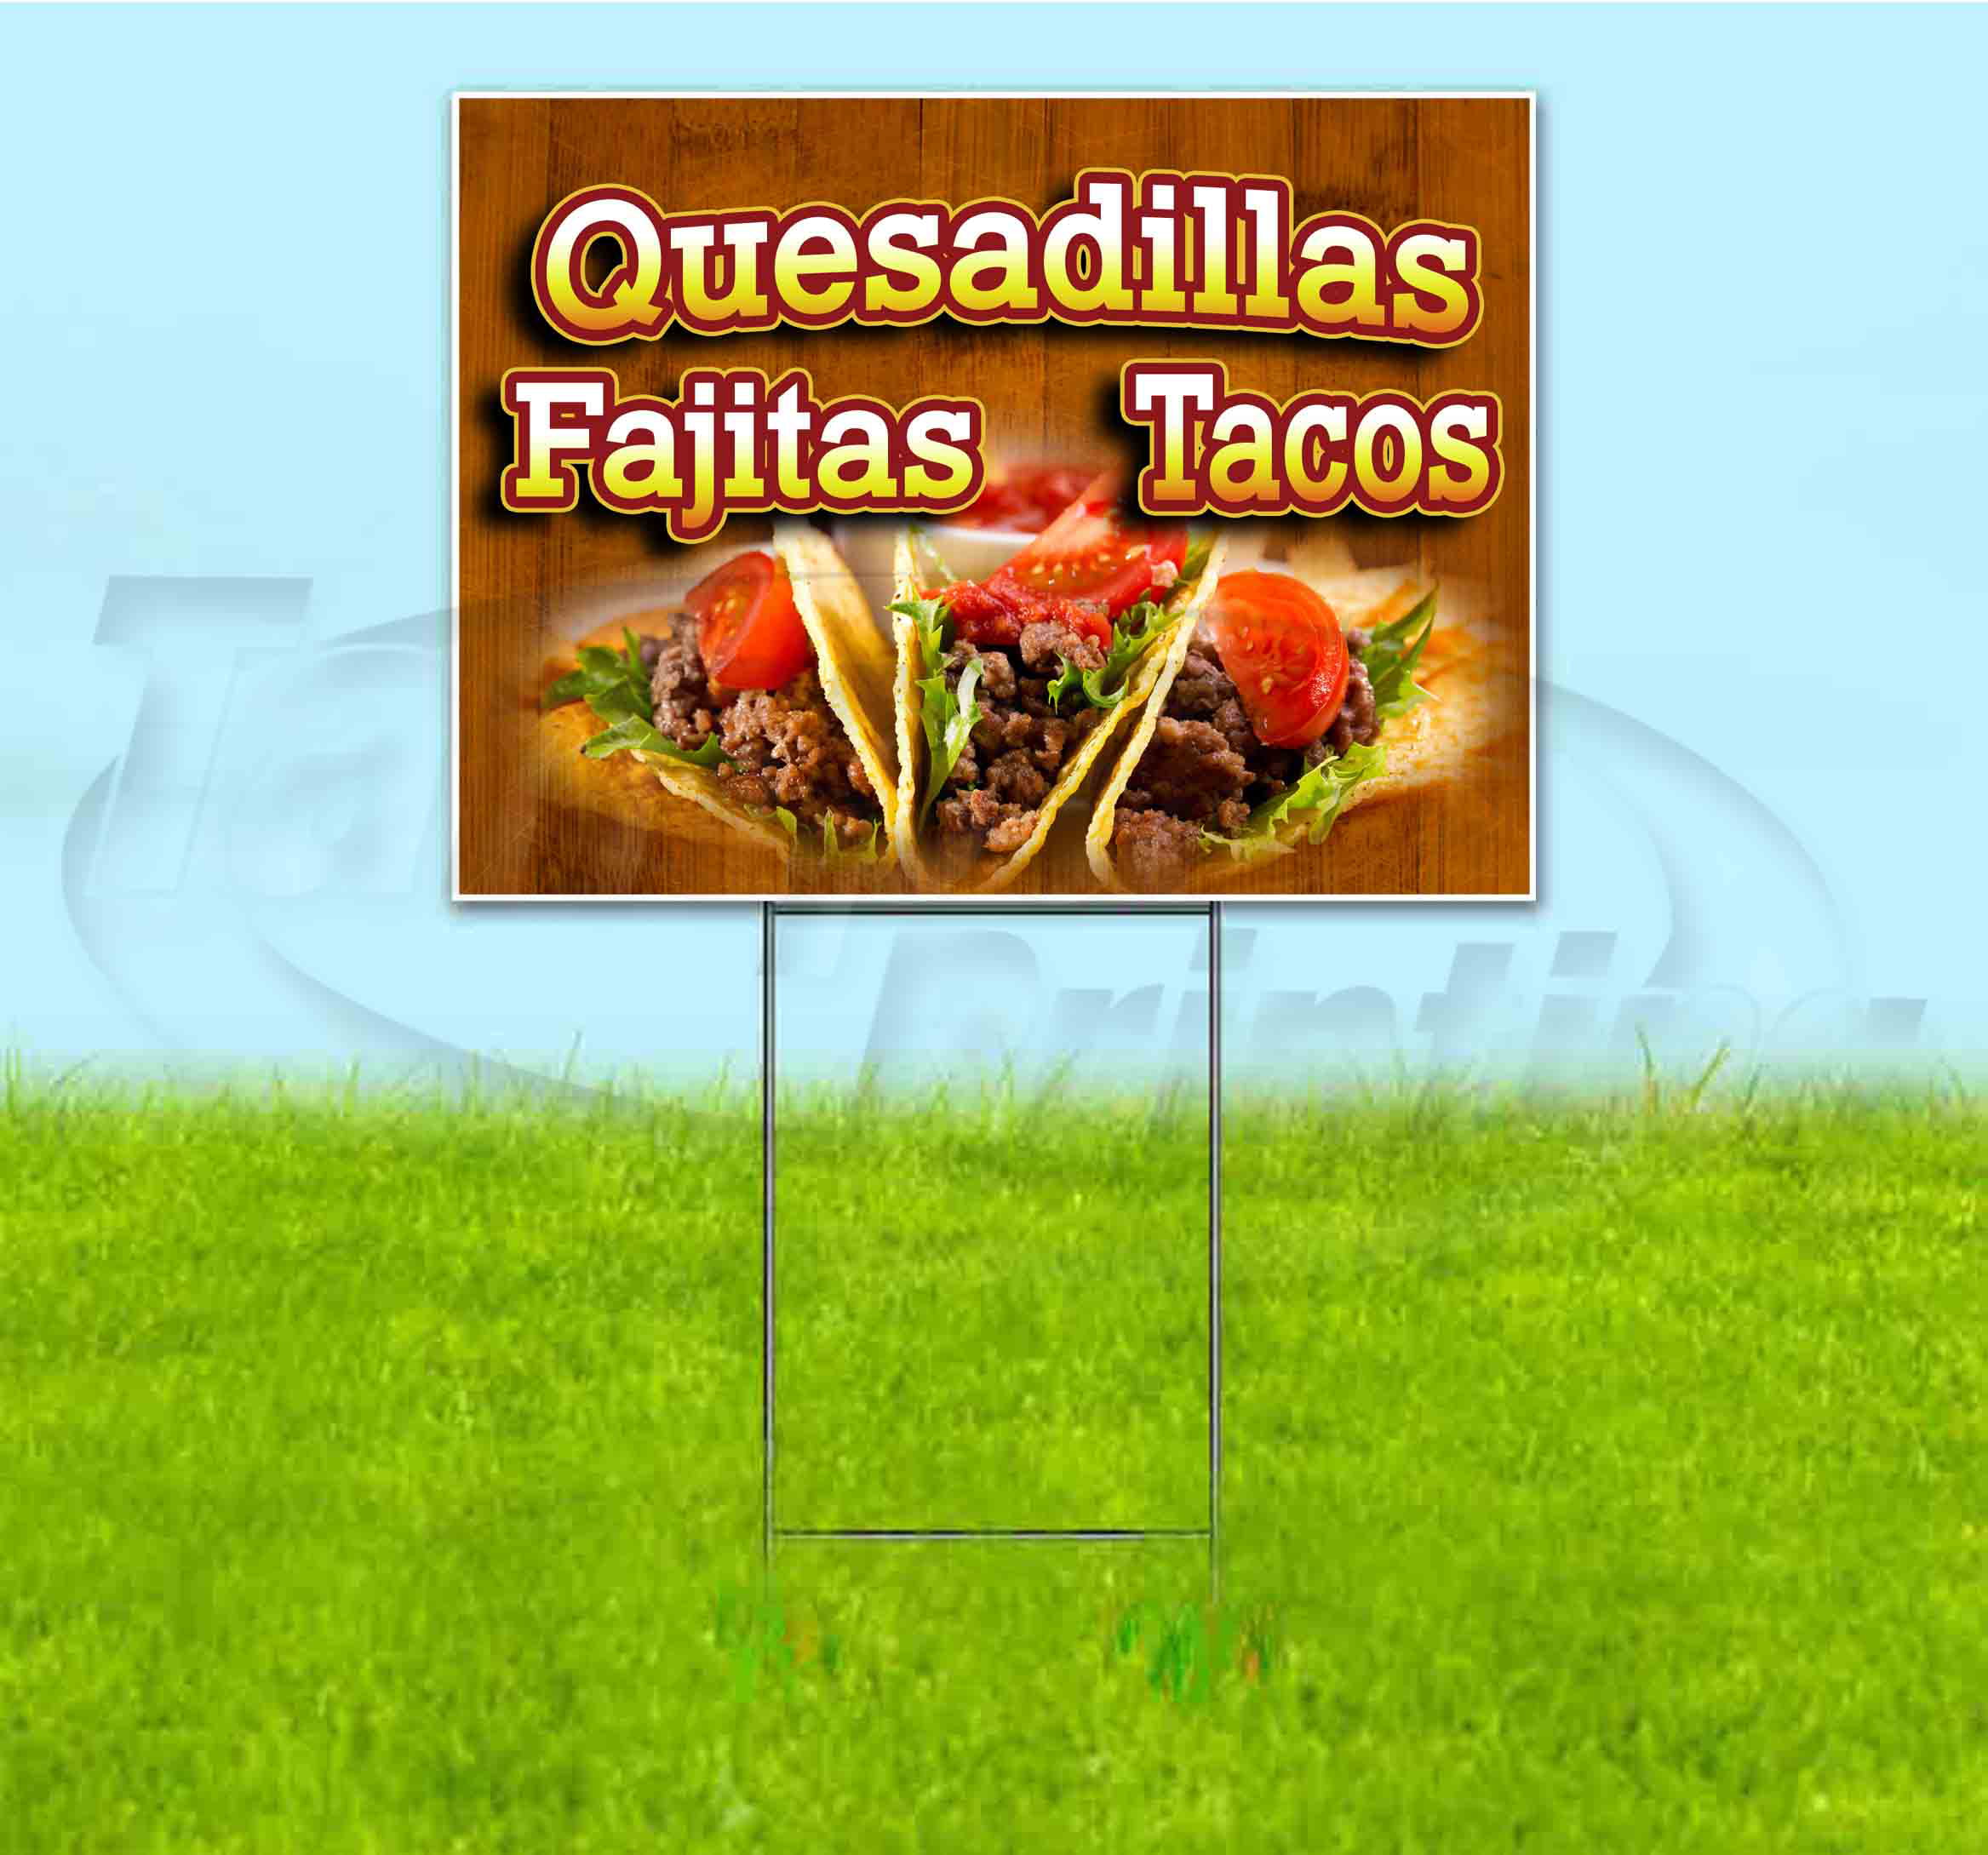 QUESADILLAS FAJITAS TACOS Advertising Vinyl Banner Flag Sign Many Sizes USA 